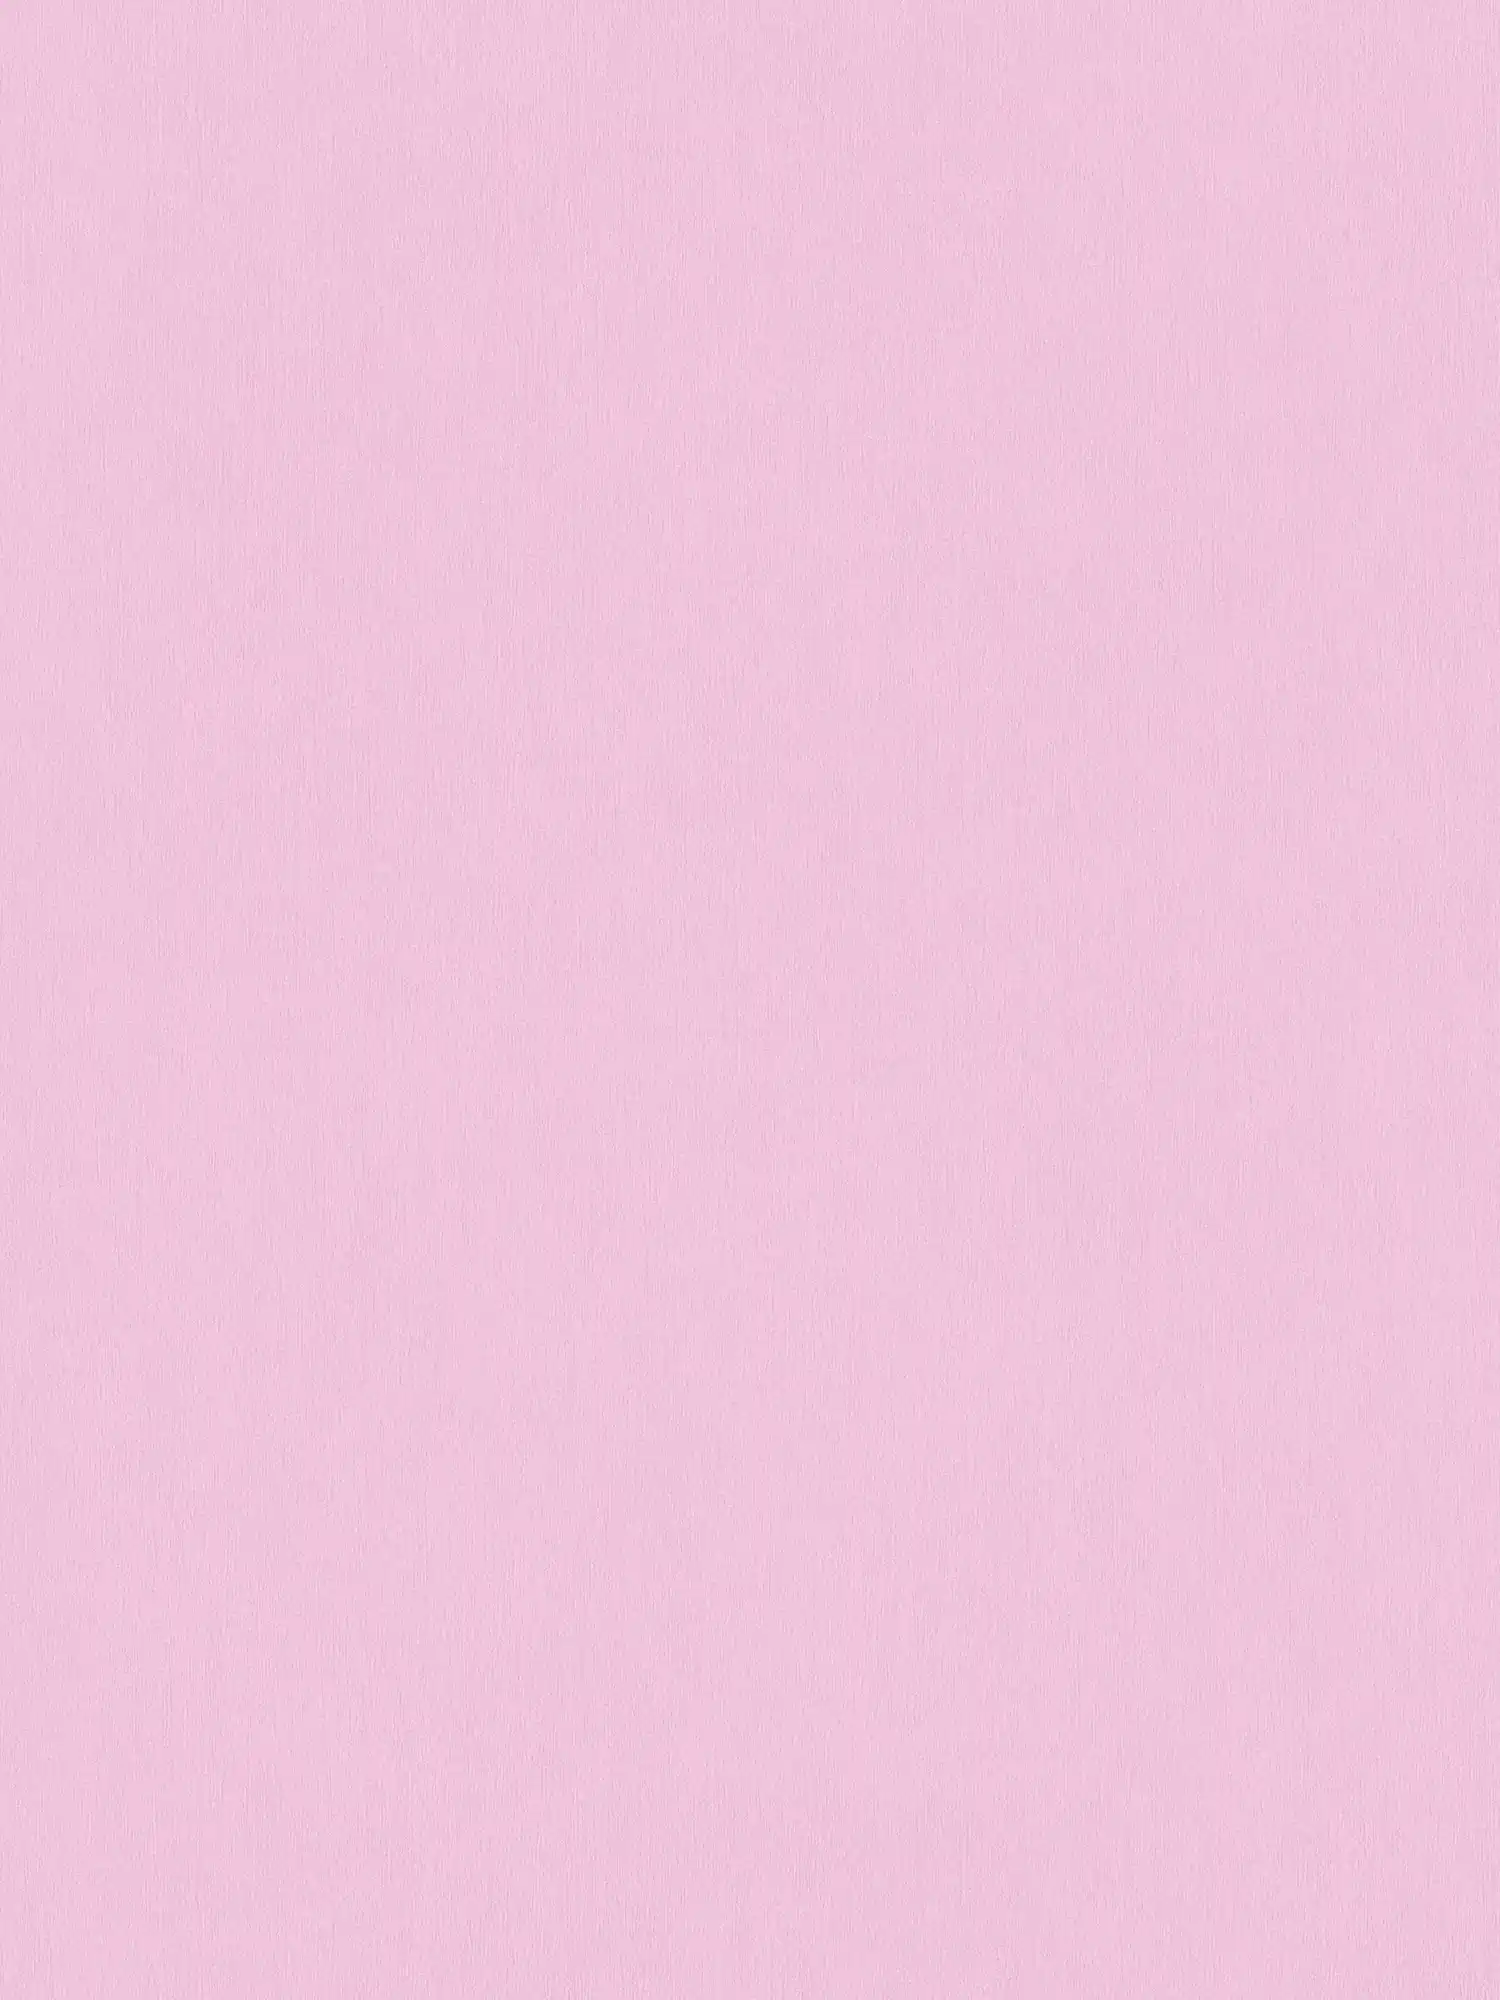 Nursery wallpaper girl uni - pink
